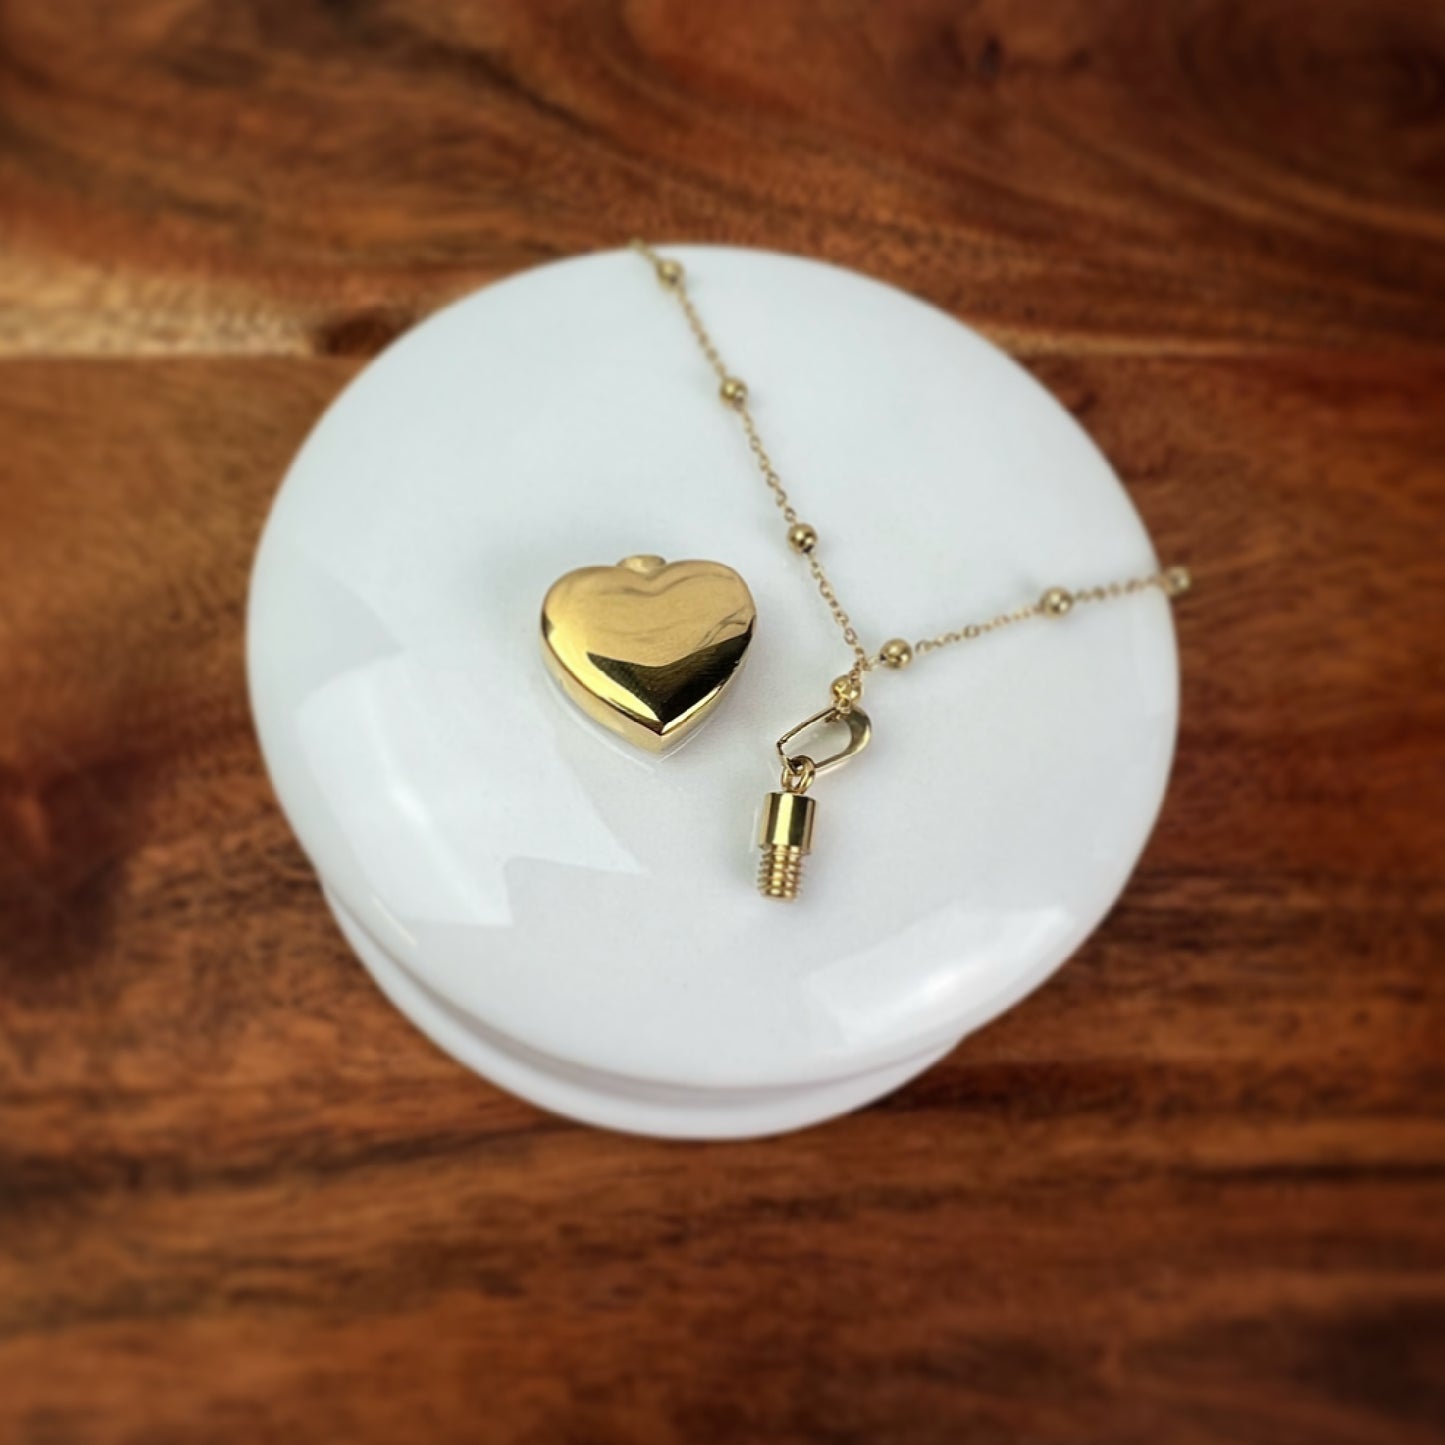 Cremation Urn Necklace | Memorial Jewelry Keepsake | Heart Pendant